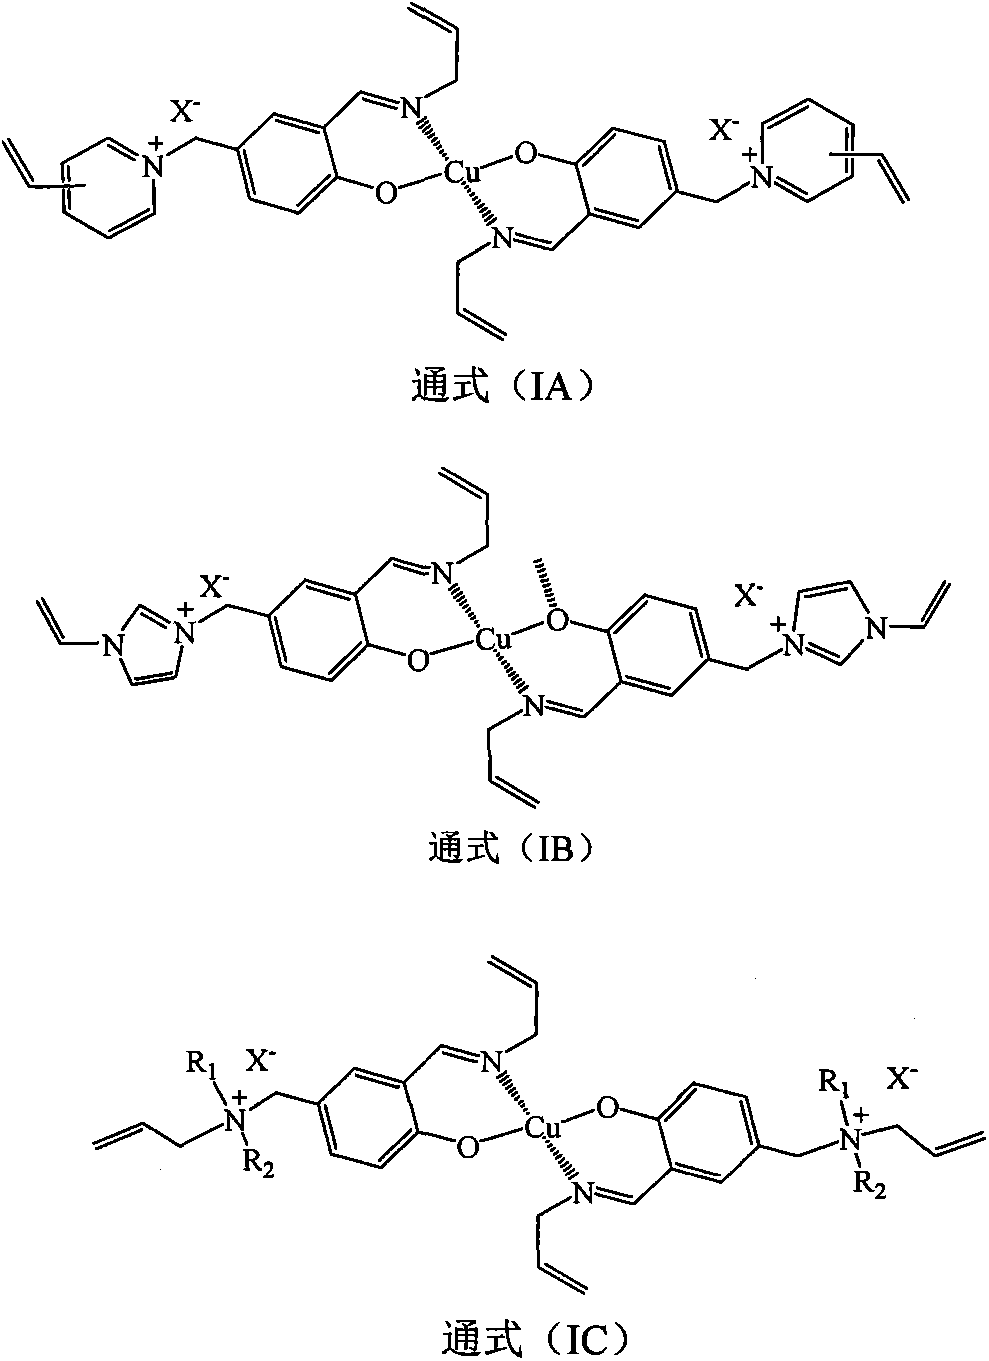 Cross-linkable copper (II) monomer containing quaternary ammonium cation and salicylic Schiff base and preparation method of cross-linkable copper (II)